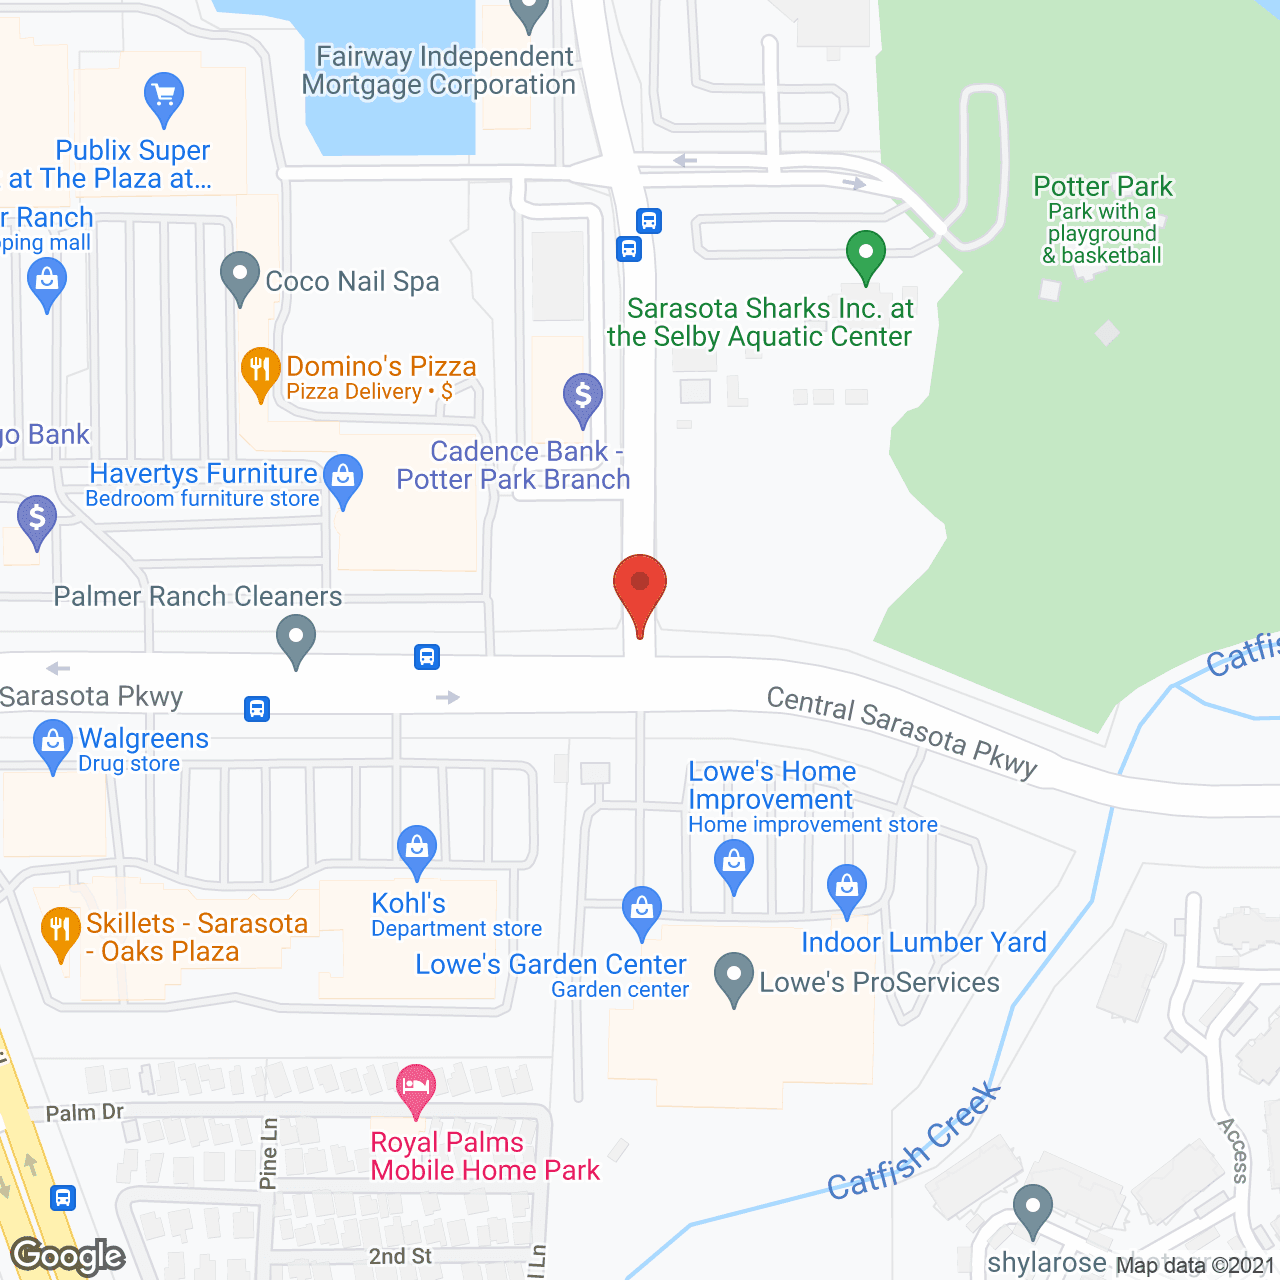 Glenridge On Palmer Ranch in google map